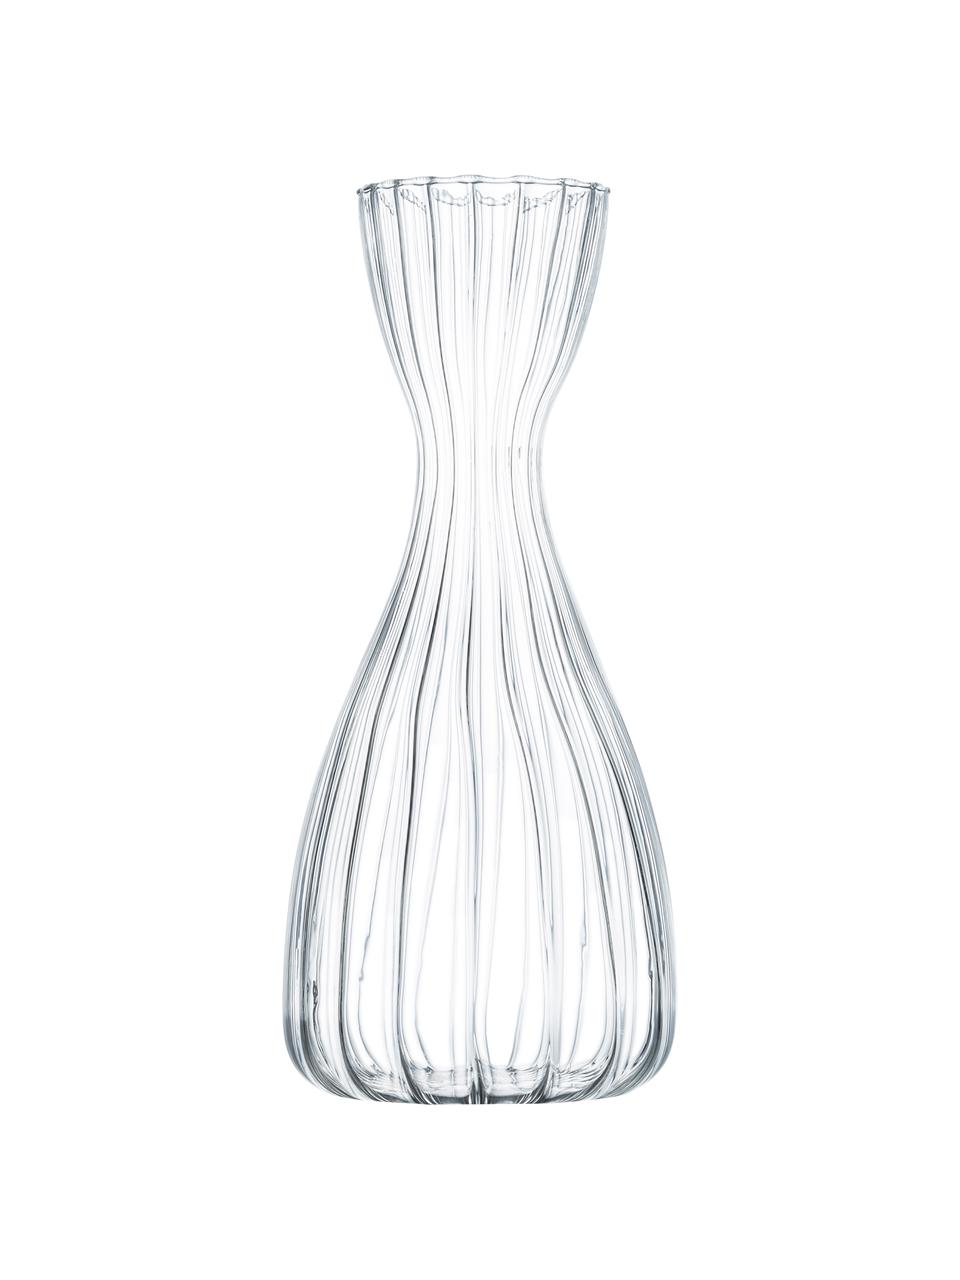 Karaf Romantic uit borosilicaatglas en met groefreliëf, 1 L, Borosilicaatglas, Transparant, Ø 8 x H 25 cm